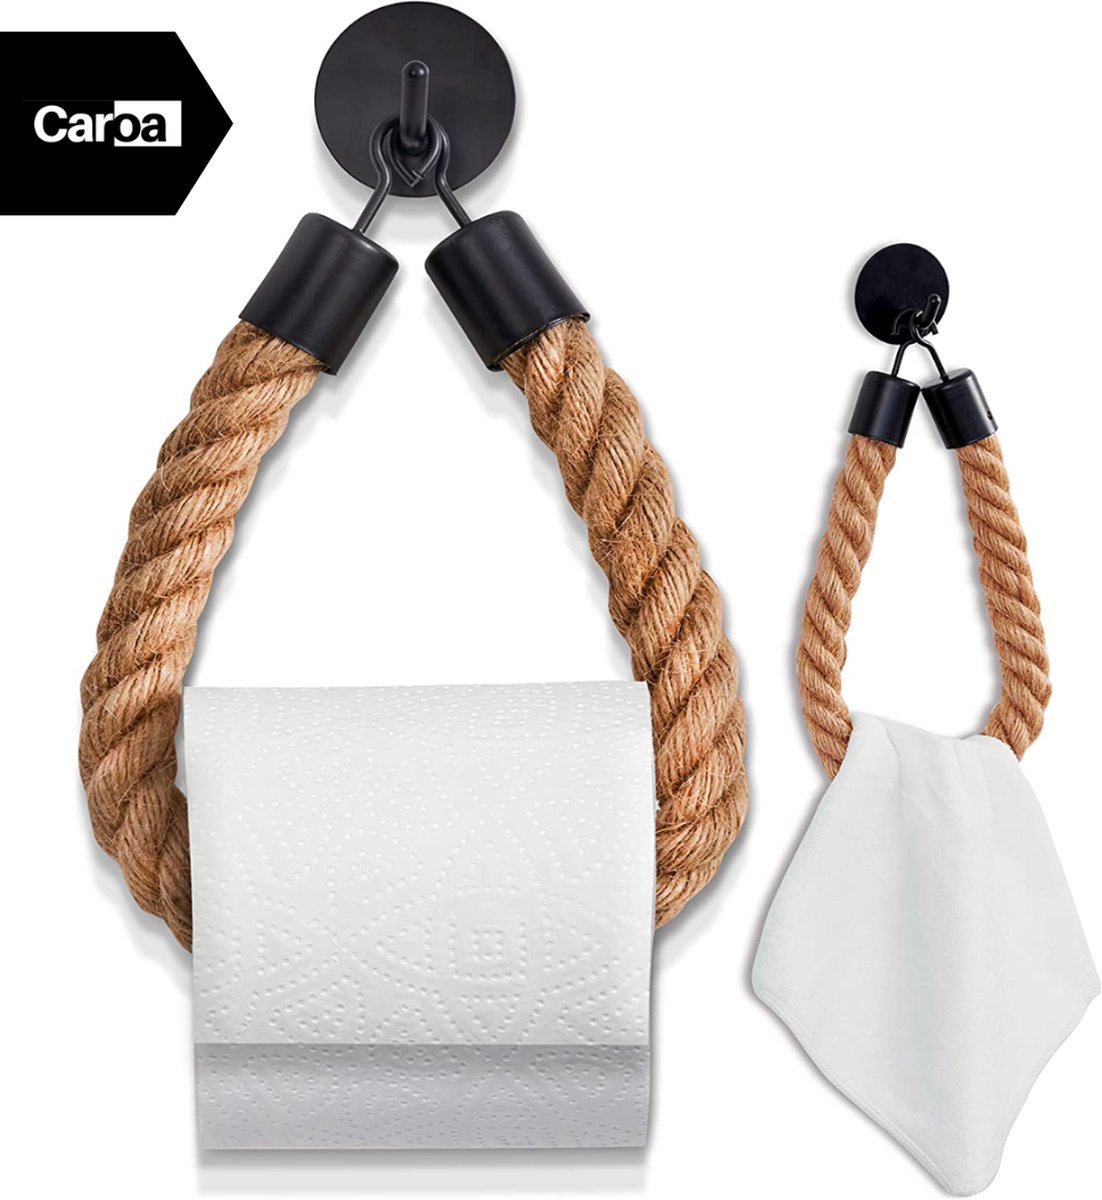 Caroa Pro - wc rolhouder - wc rolhouder zwart - toiletpapierhouder - wc borstel met houder - wc rolhouder zonder boren